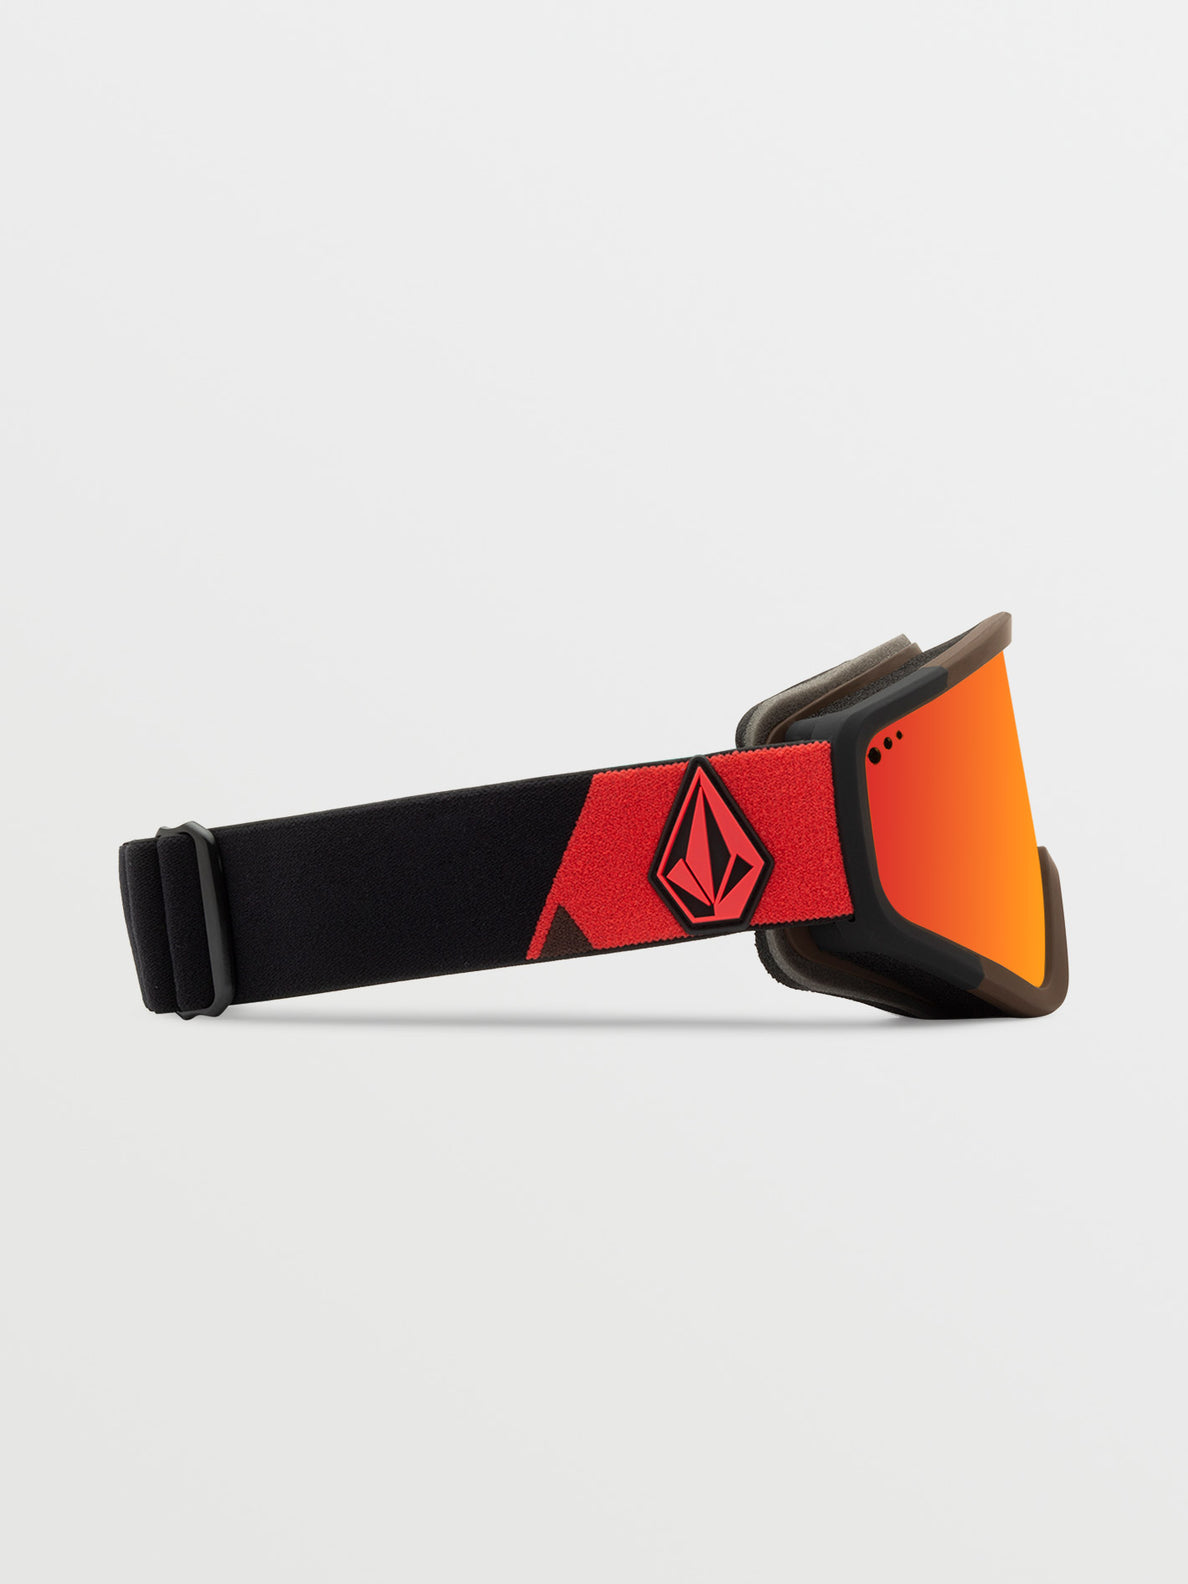 Attunga Goggle - Orange/Brown / Red Chrome+BL